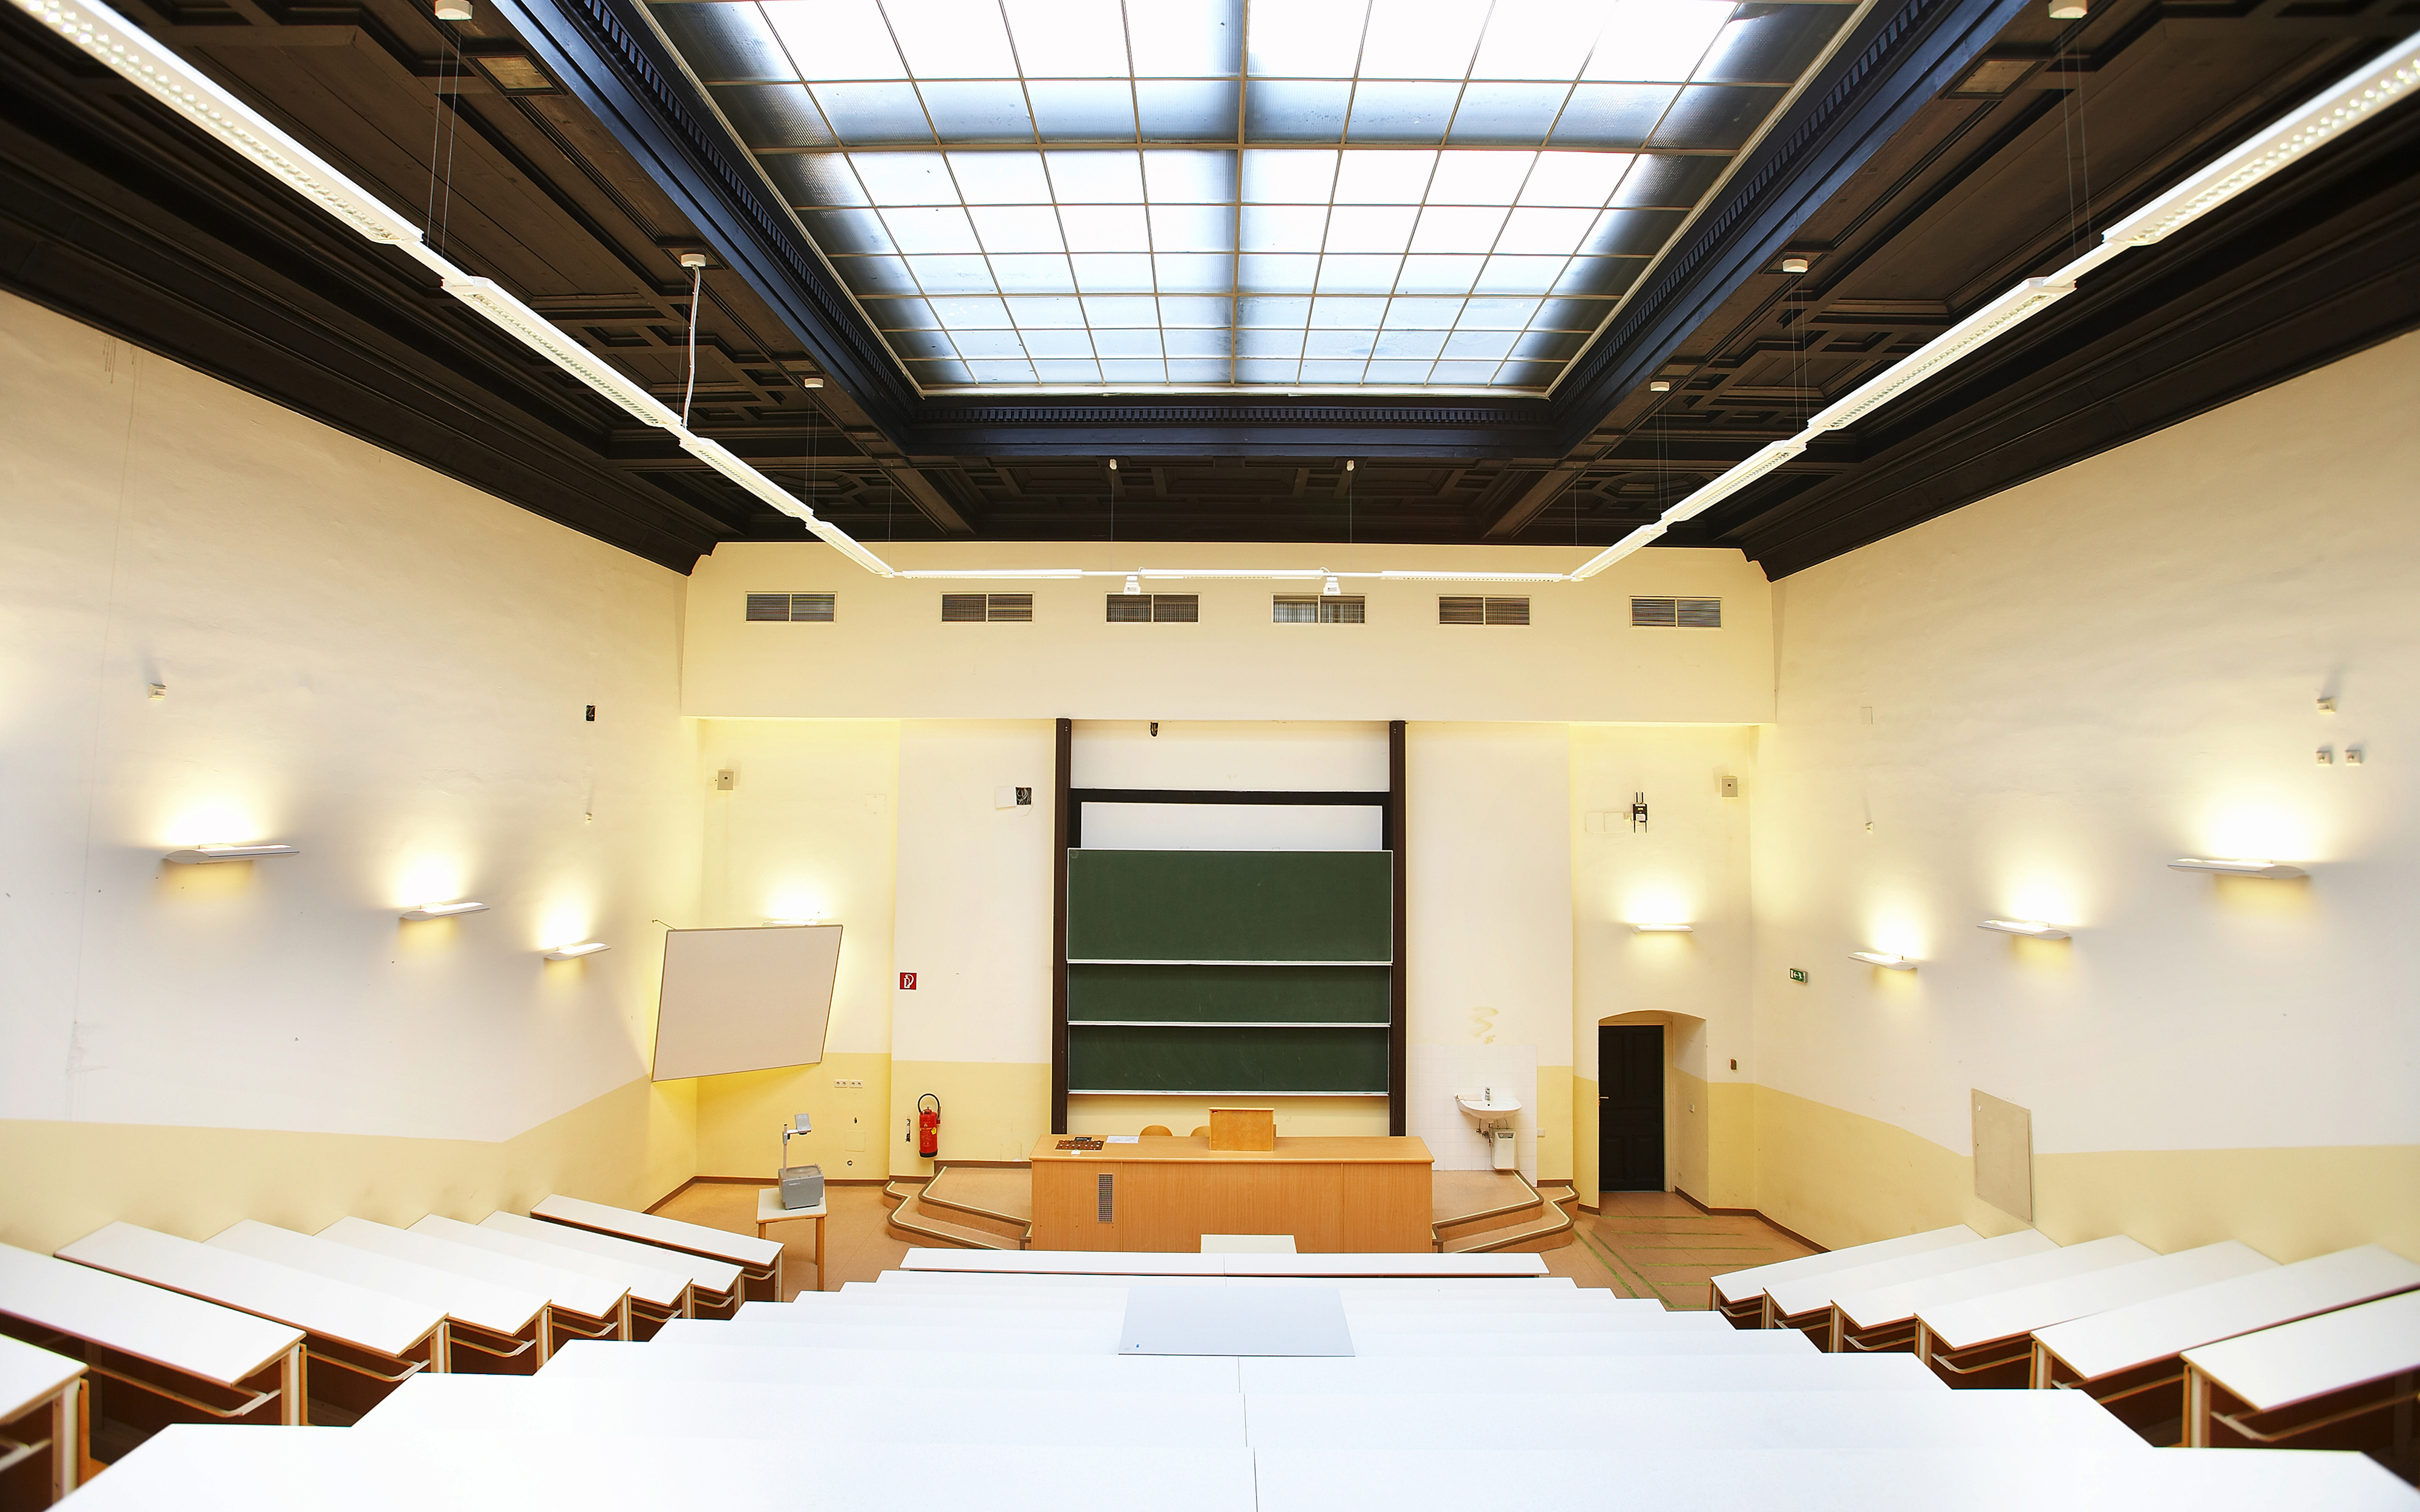 Lecture hall. Венский университет. WIUT lecture Hall. University lecture Room.